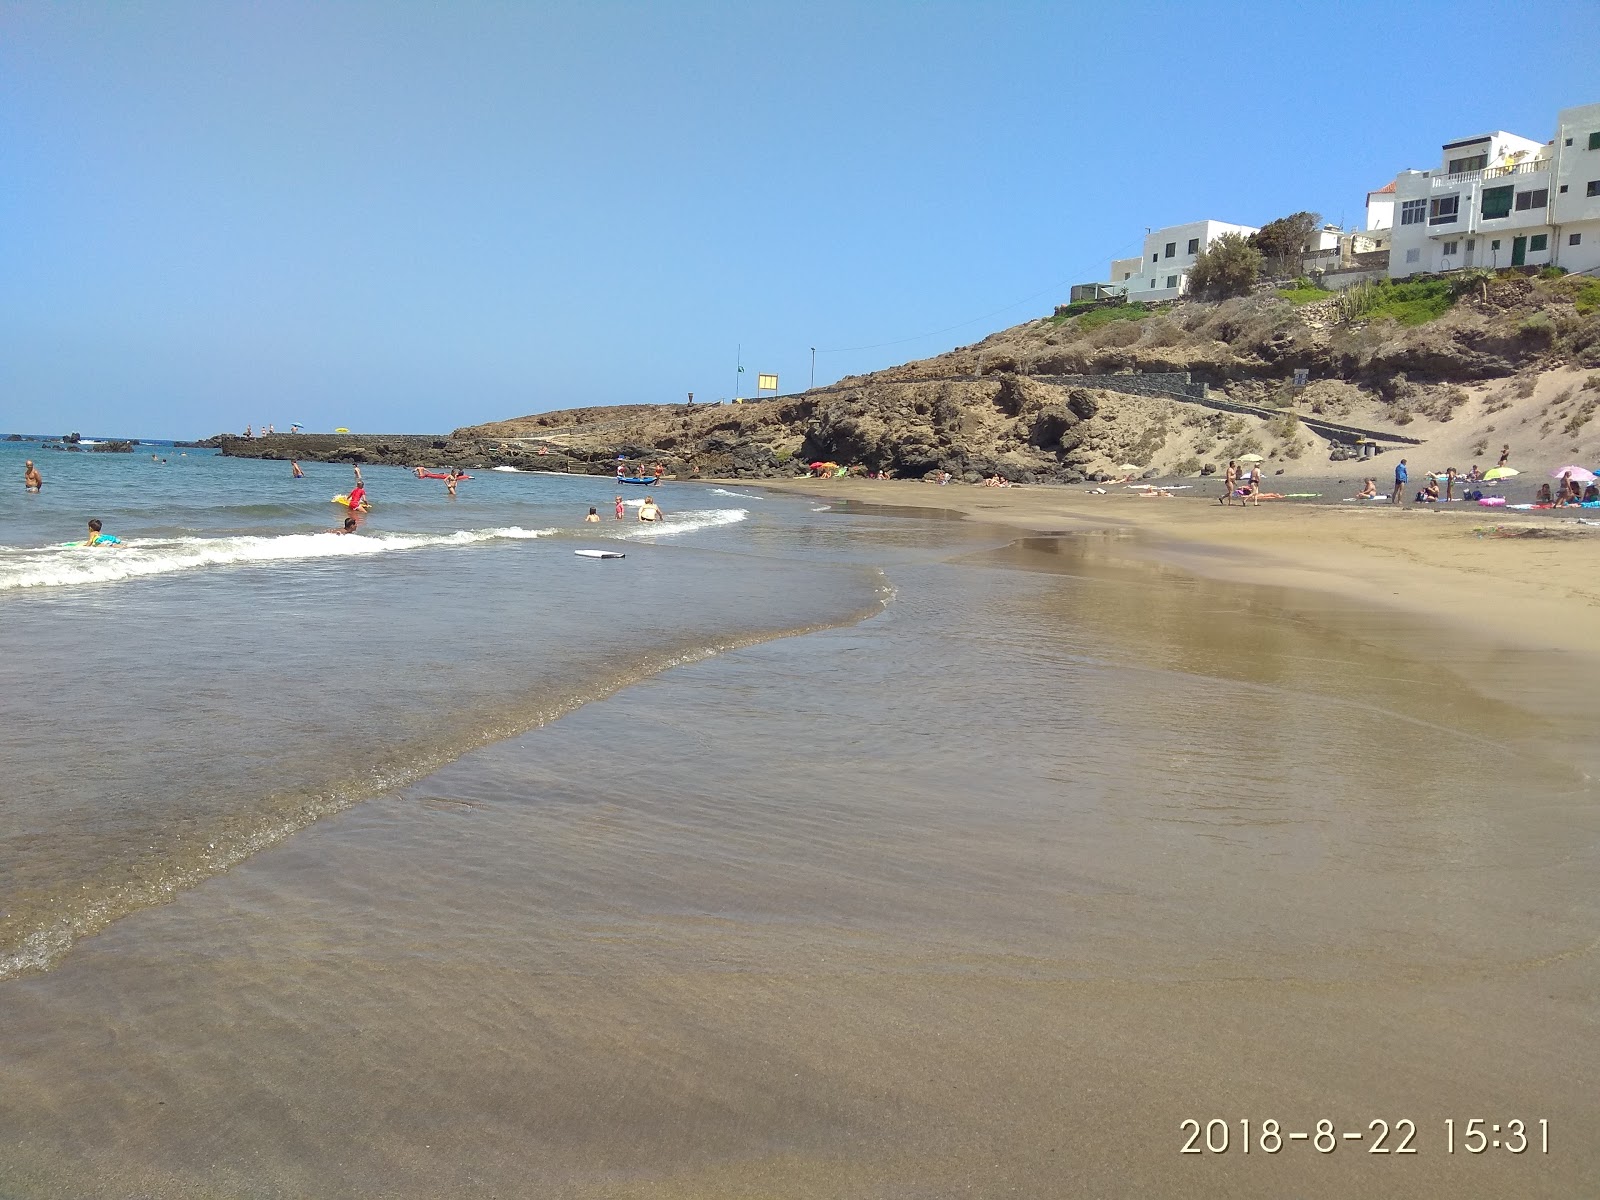 Foto de Playa el Poris com alto nível de limpeza